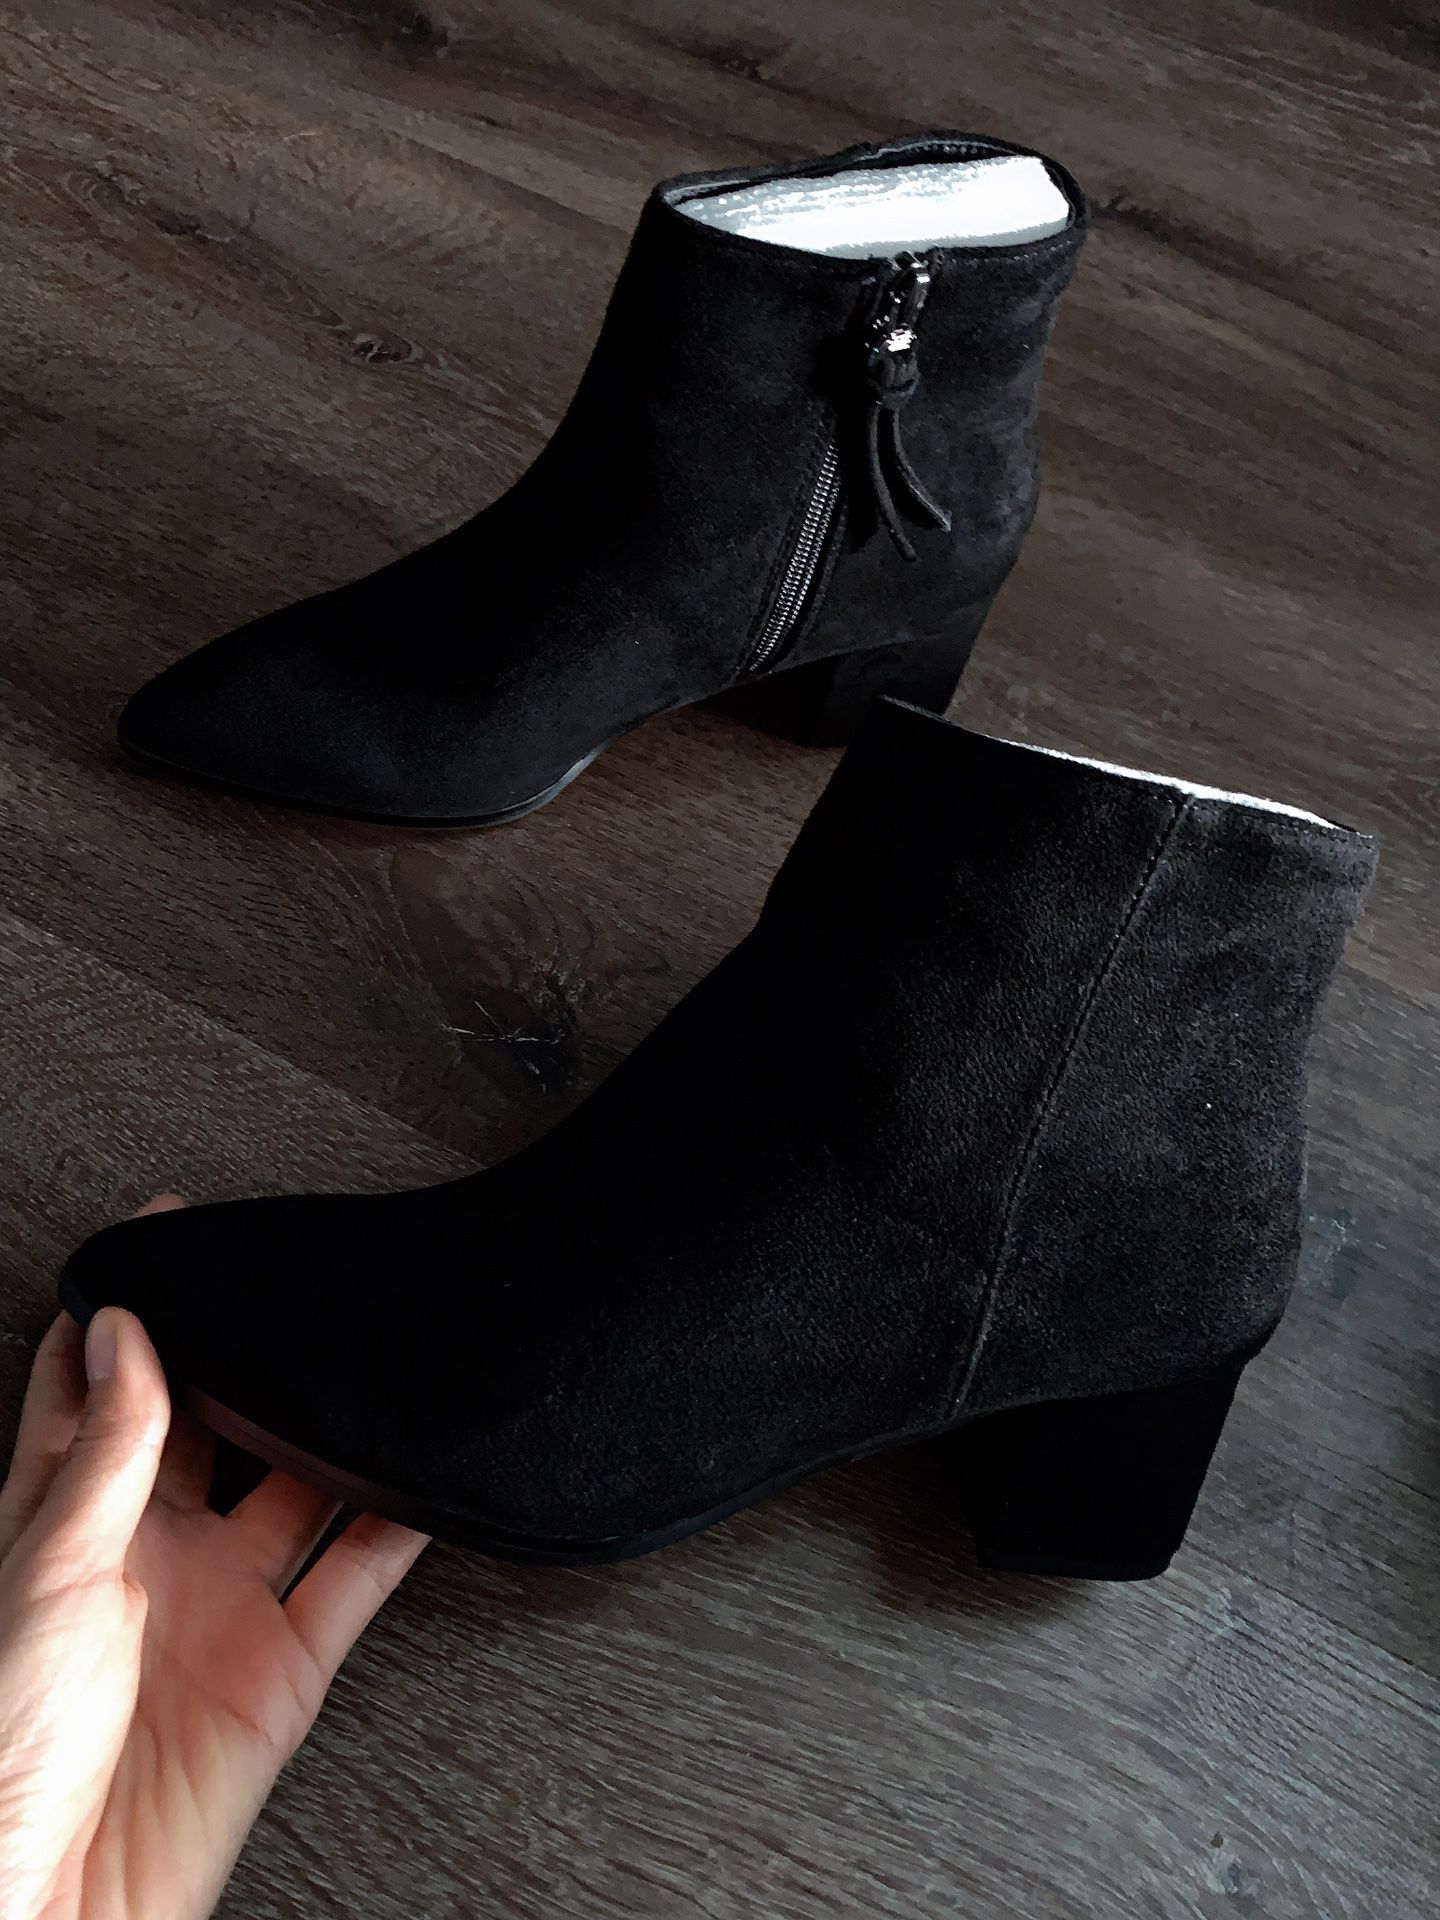 New women heel boots size 7